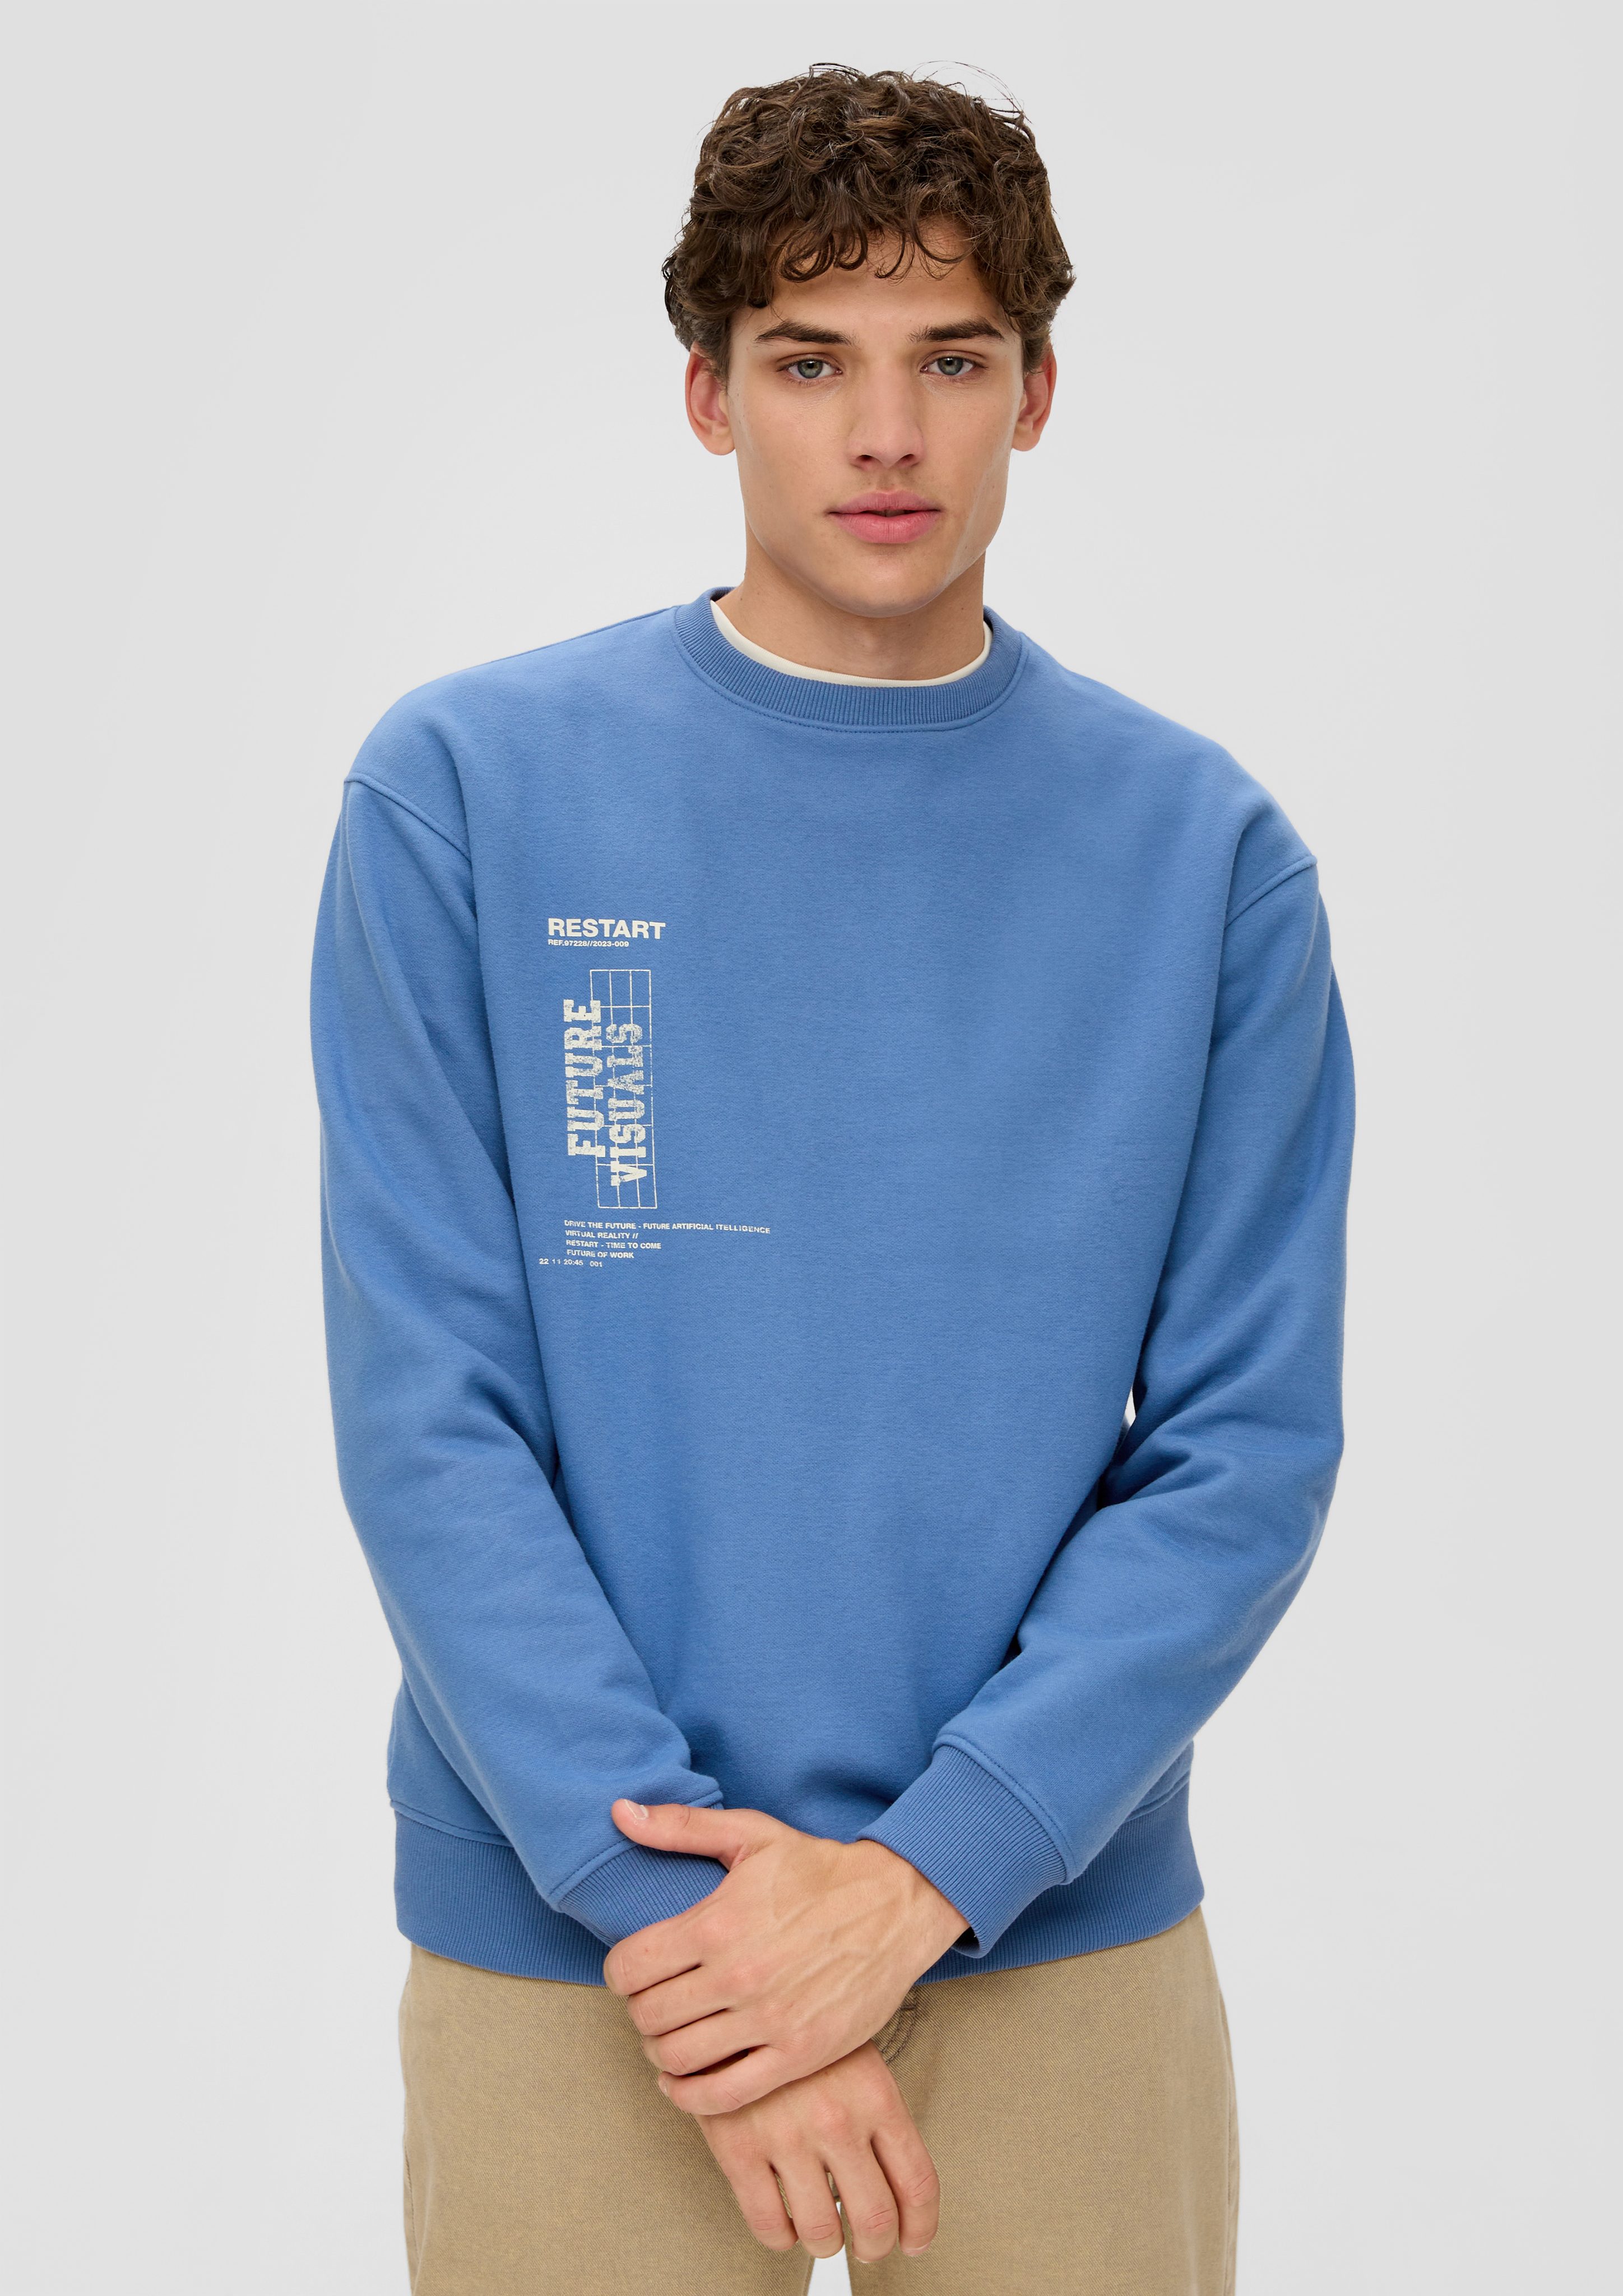 Sweatshirt Rückenprint großem mit Sweatshirt himmelblau QS